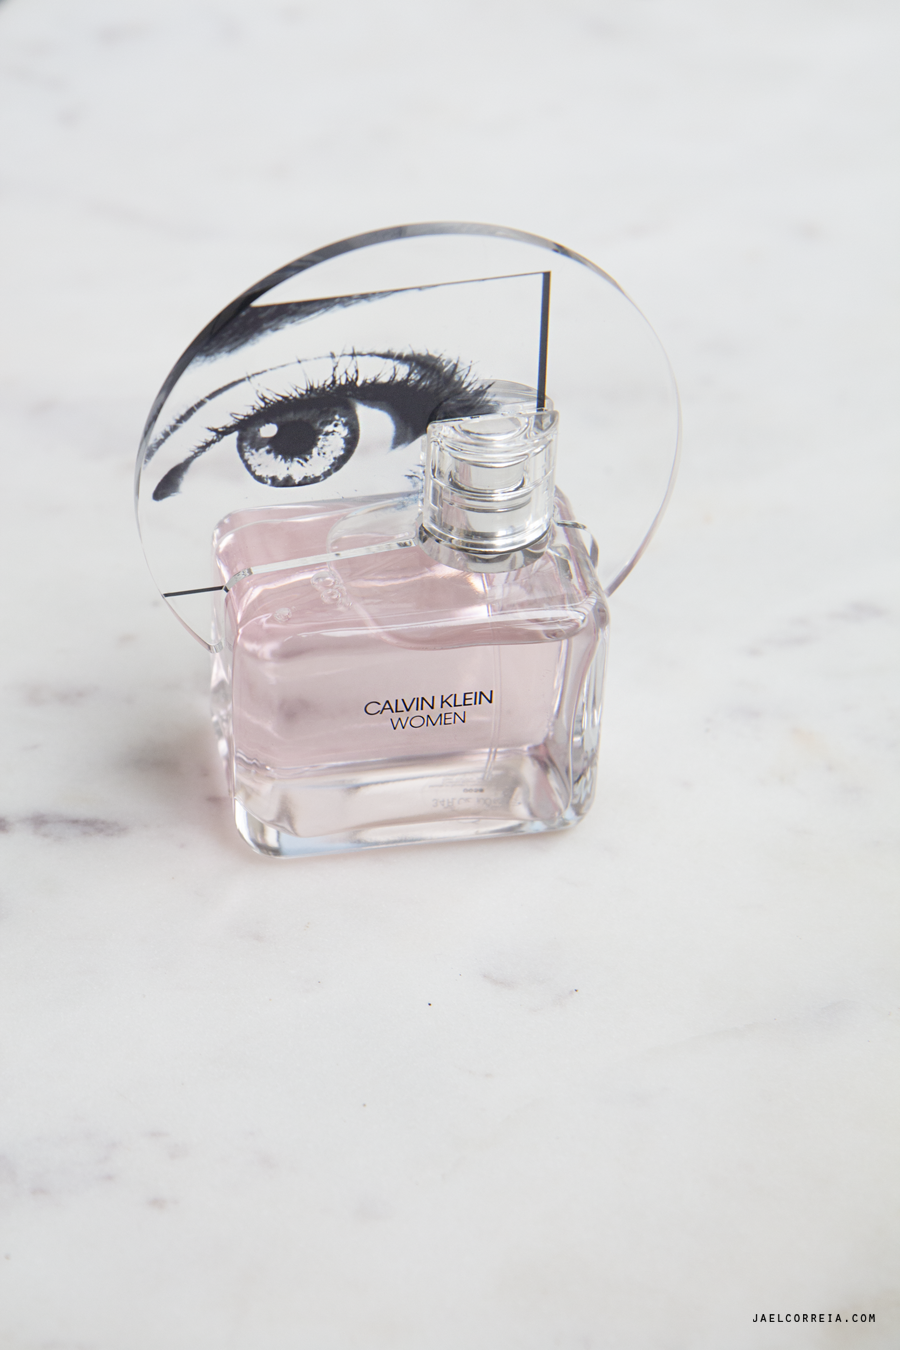 CK women Calvin Klein women eau de parfum perfume review jael correia portugal notino perfumes baratos originais femininos pt online shop